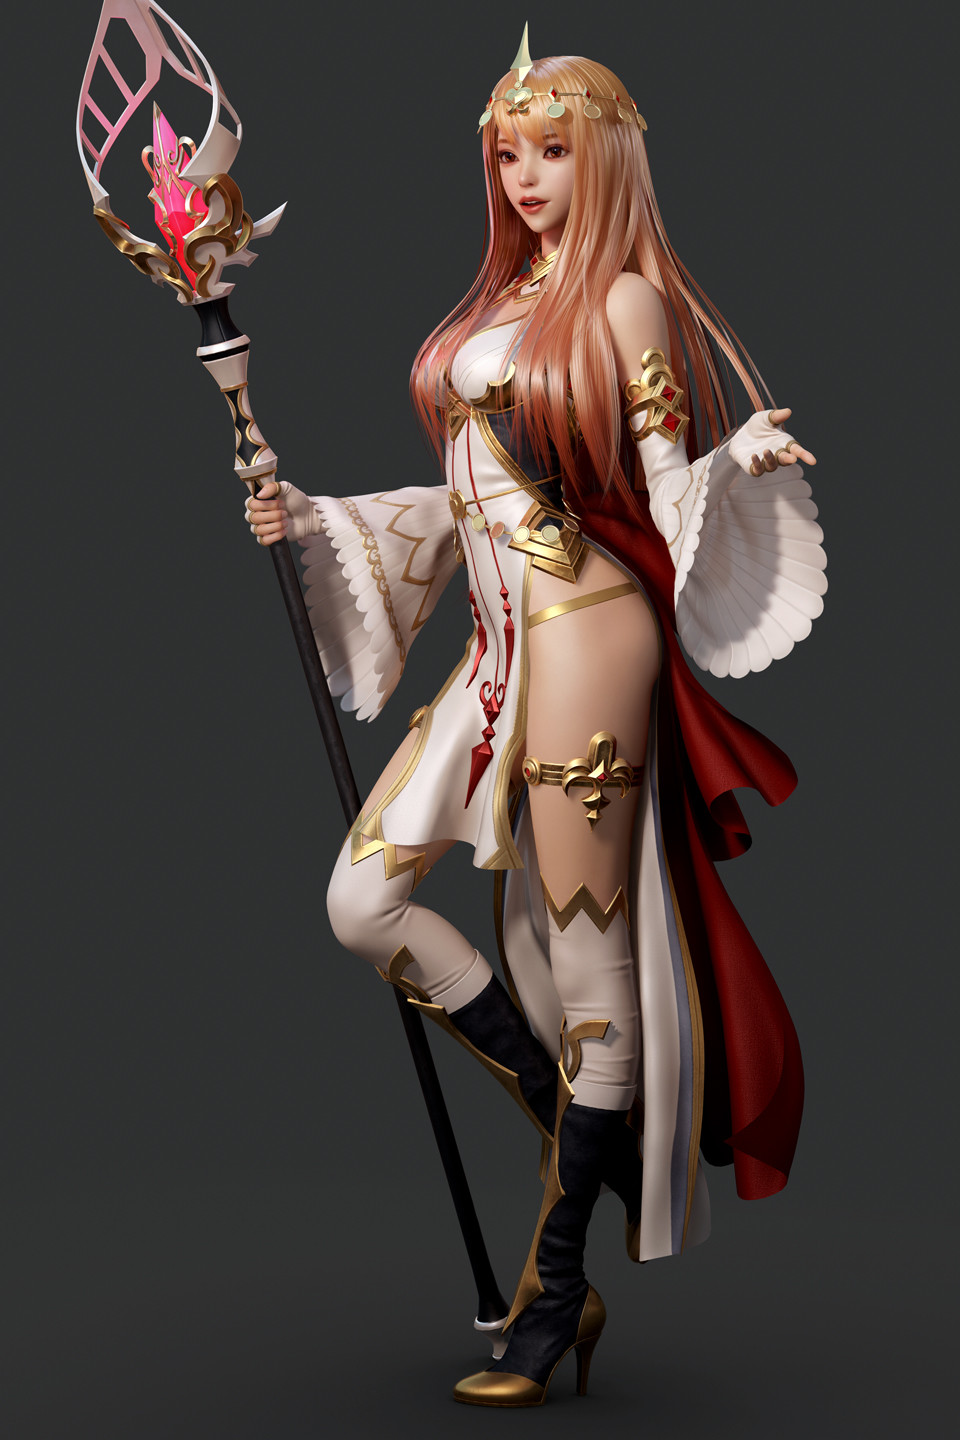 General 960x1440 Shin JeongHo CGI women blonde hair accessories dress straps weapon staff fantasy art